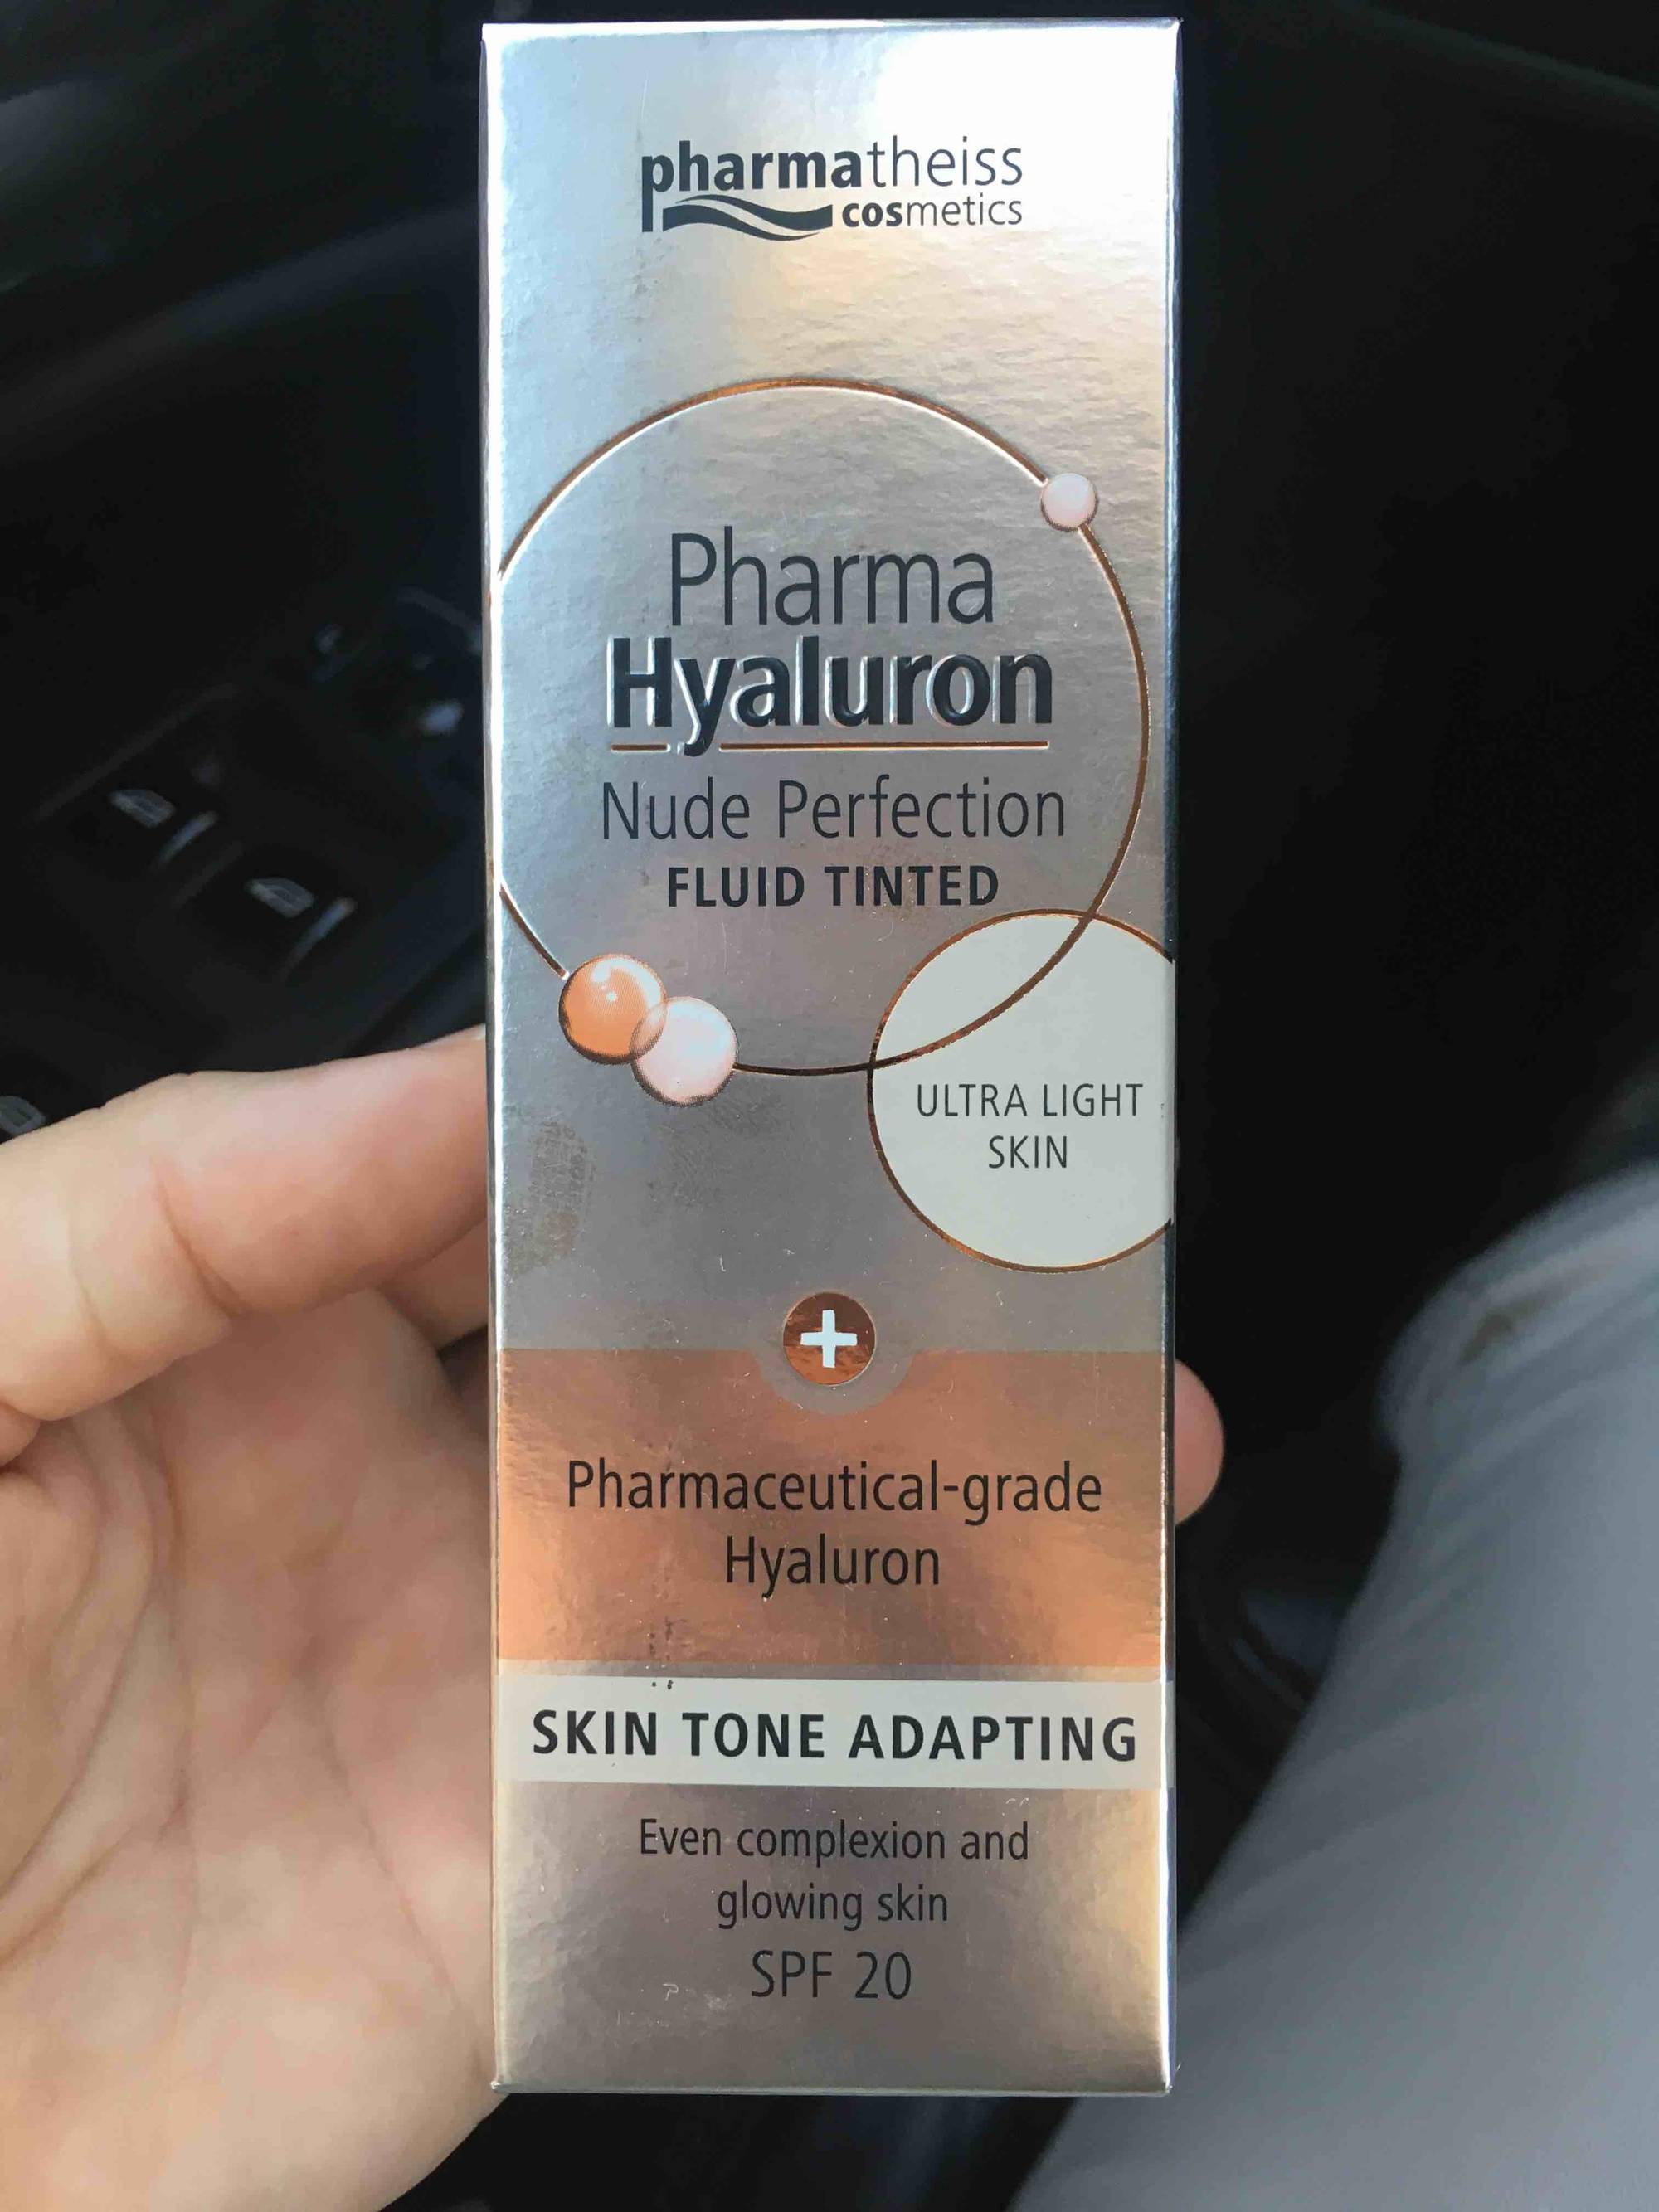 PHARMATHEISS COSMETICS - Pharma hyaluron - Nude perfection fluid tinted spf 20